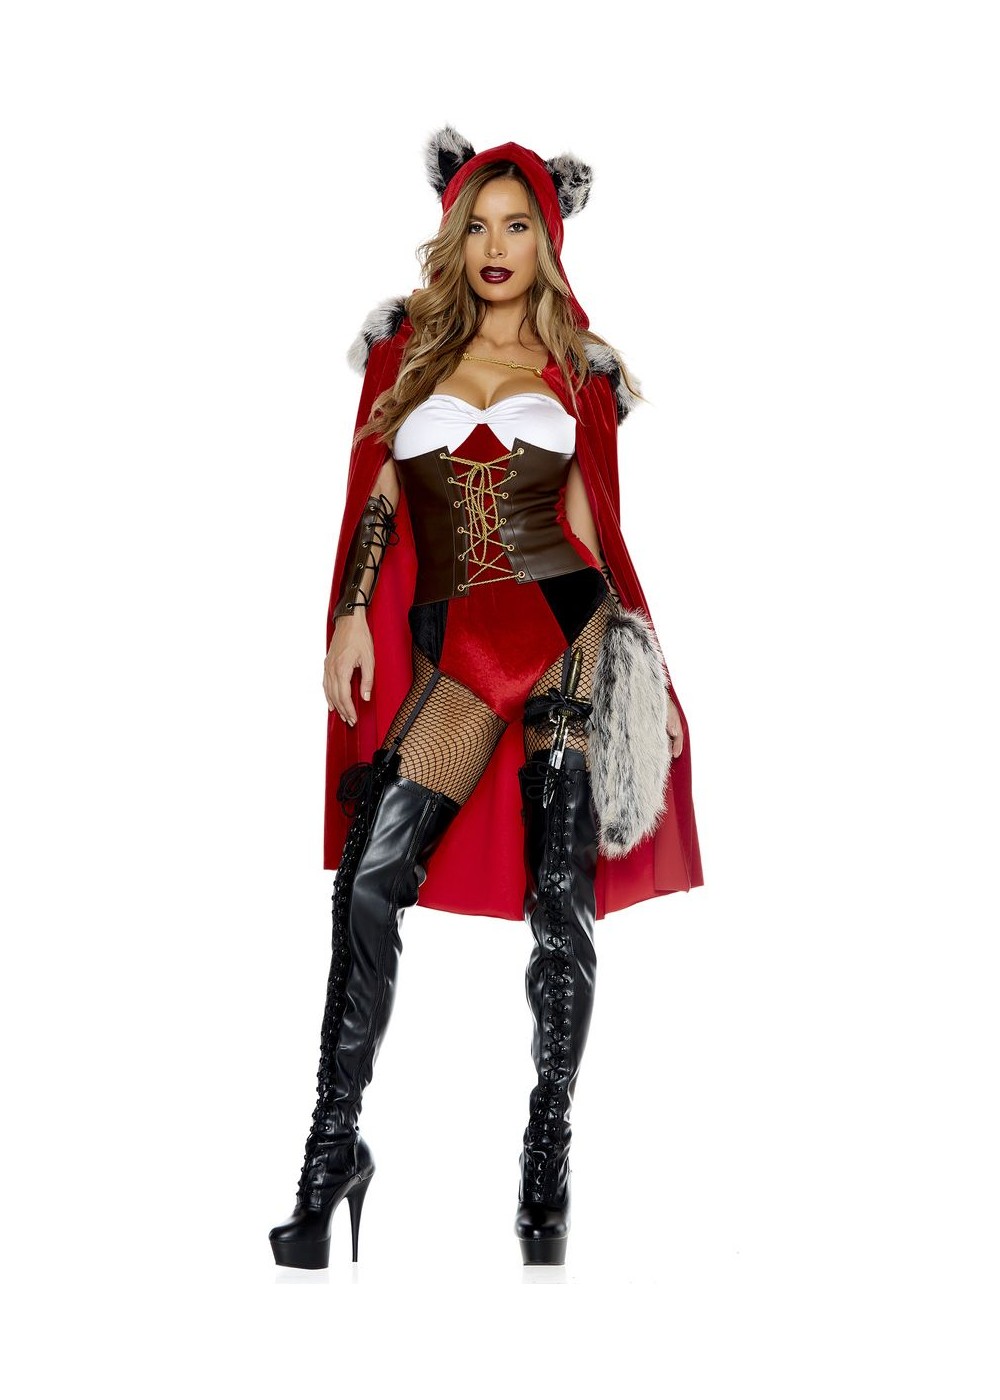 red-haute-storybook-character-women-costume